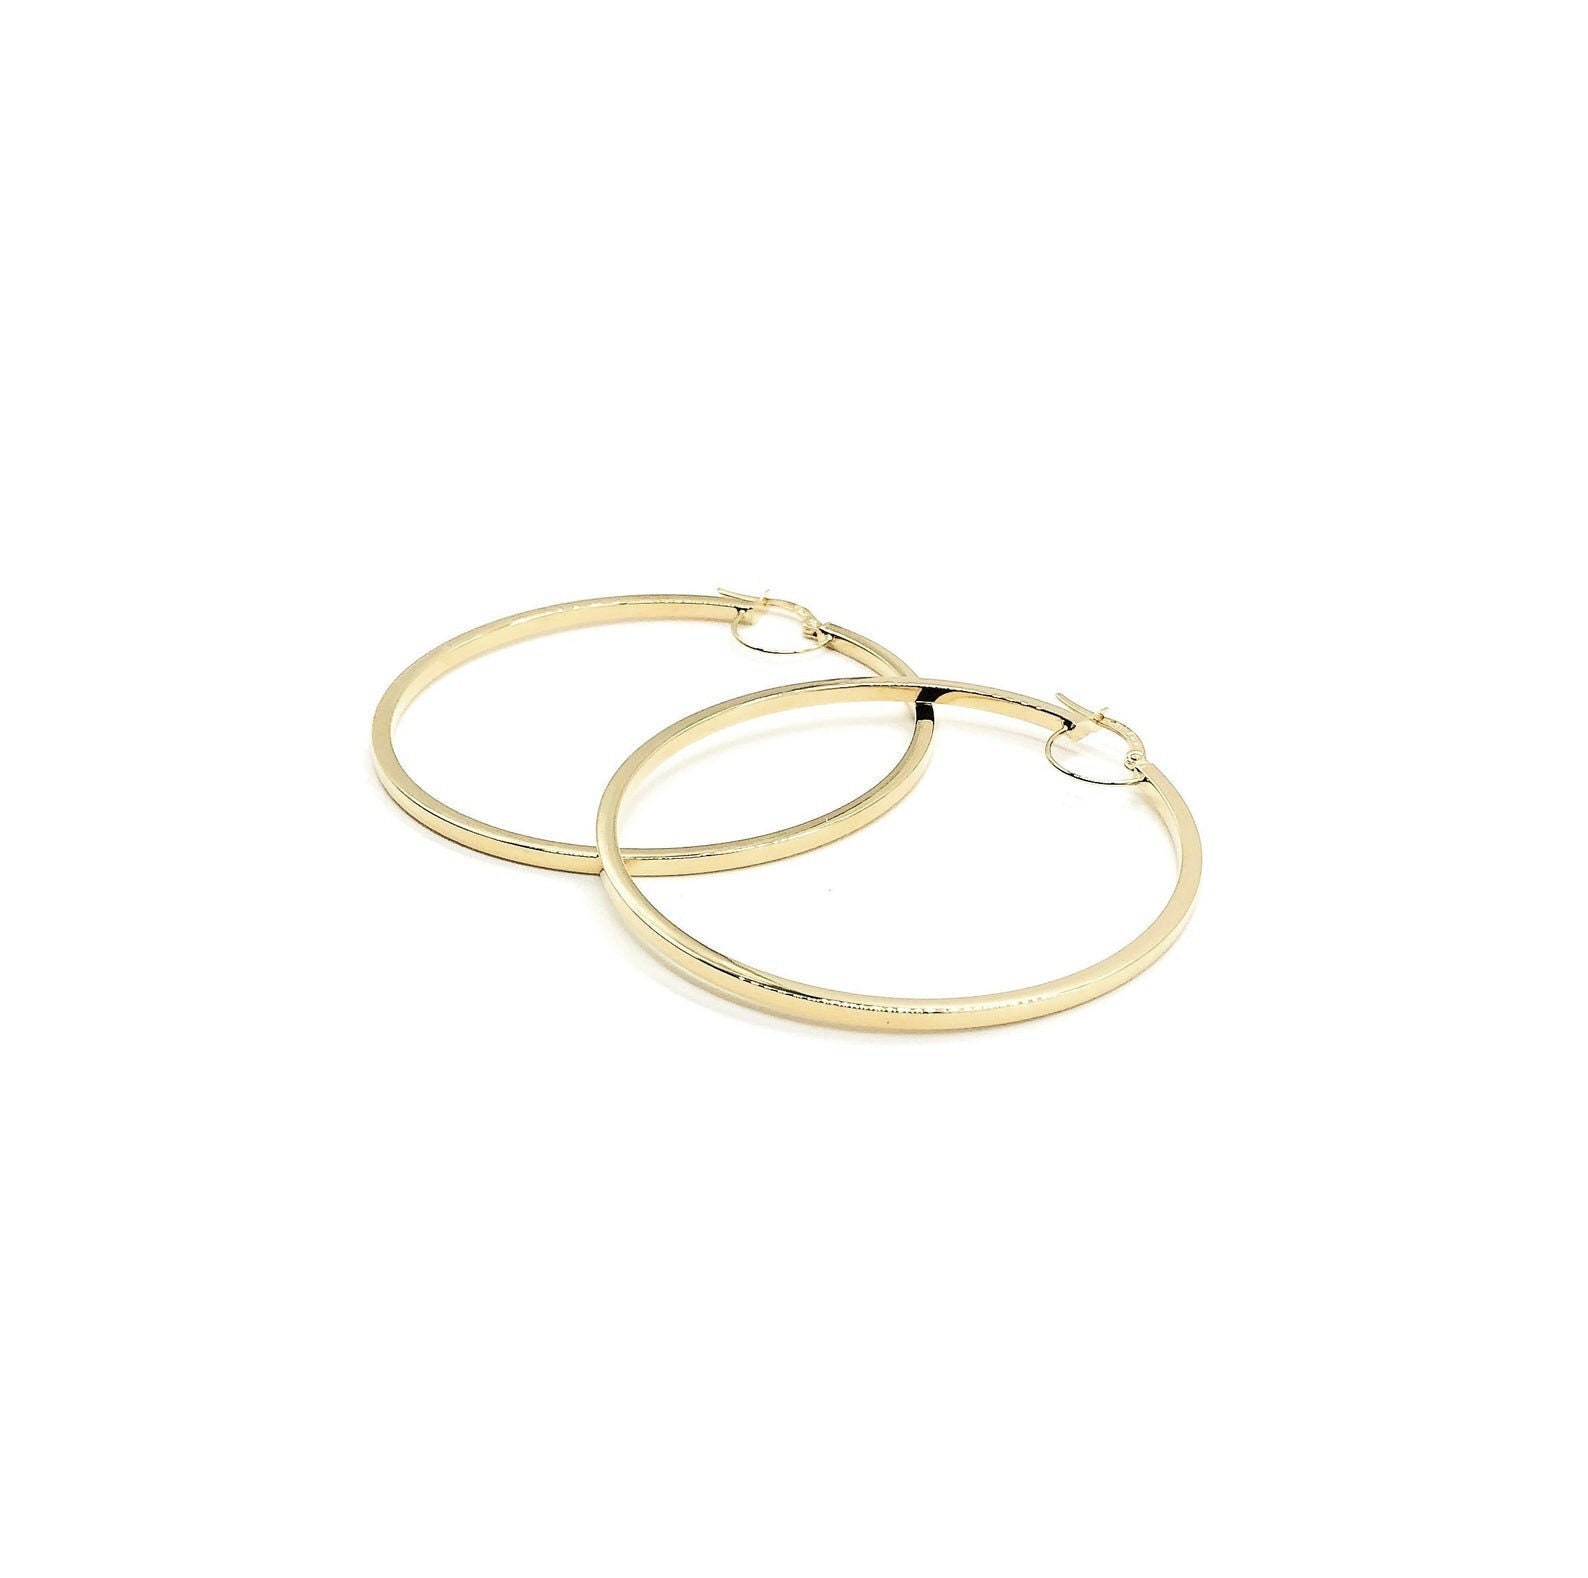 18K Yellow Gold Modern Hoop Earrings Polished Handmade By Artisans Women's Hoops Gift For Her Italian